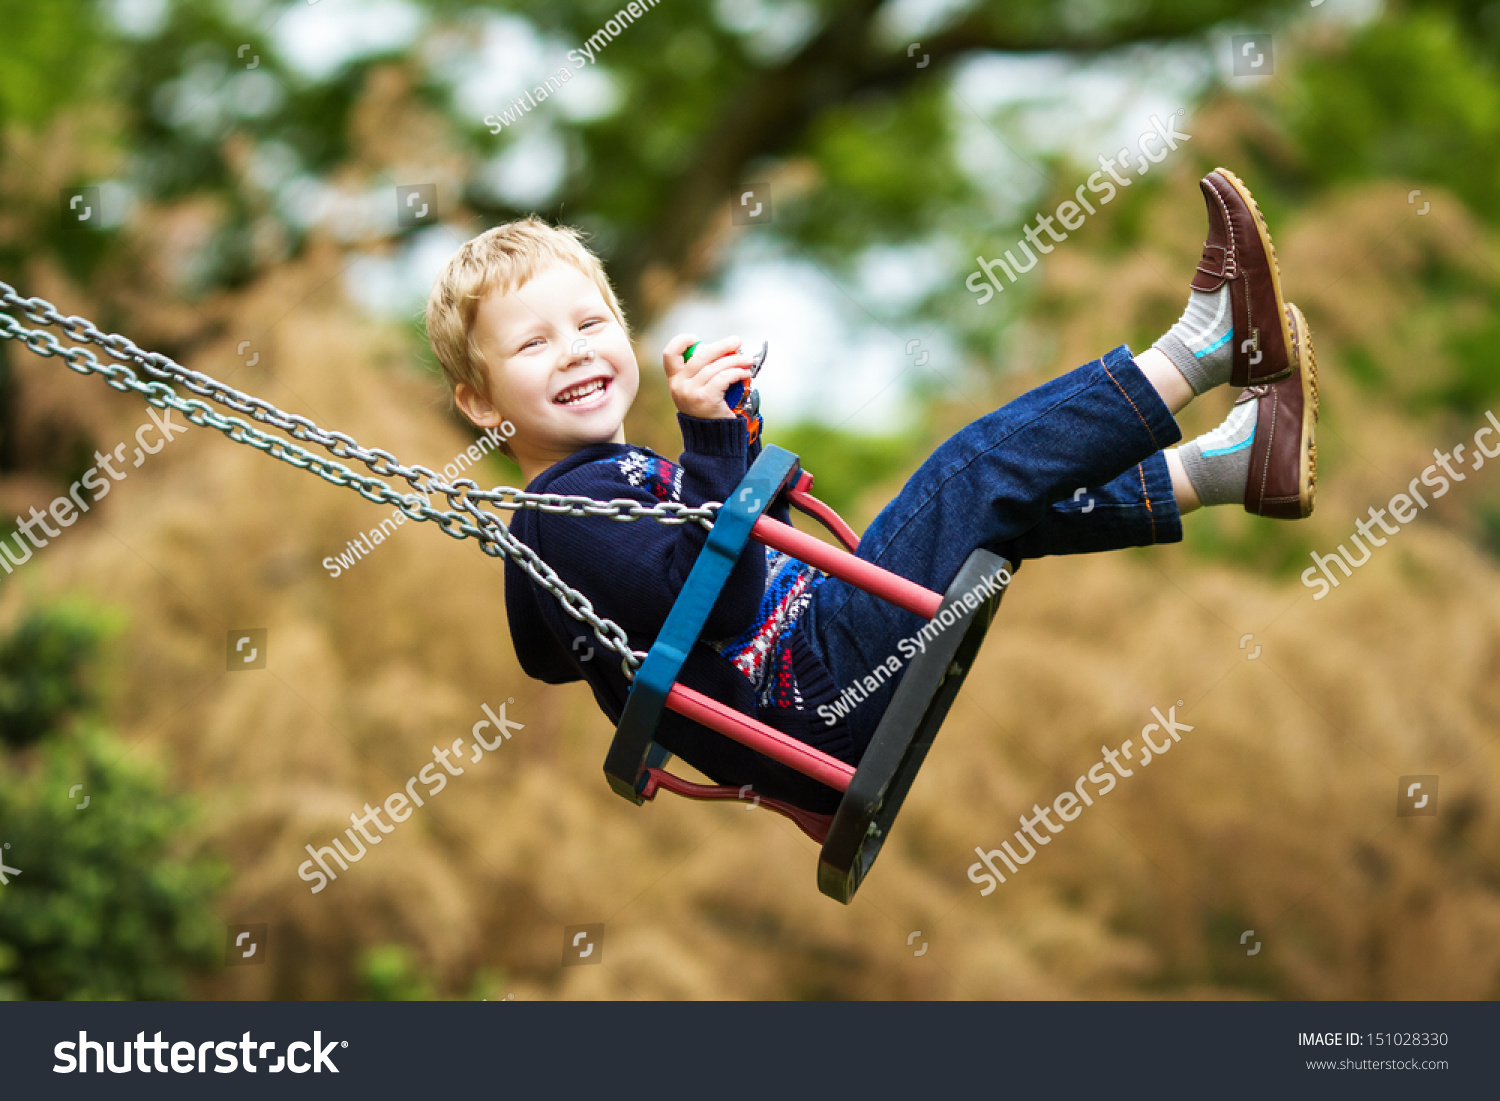 Little Child On Swing Stock Photo 151028330 : Shutterstock